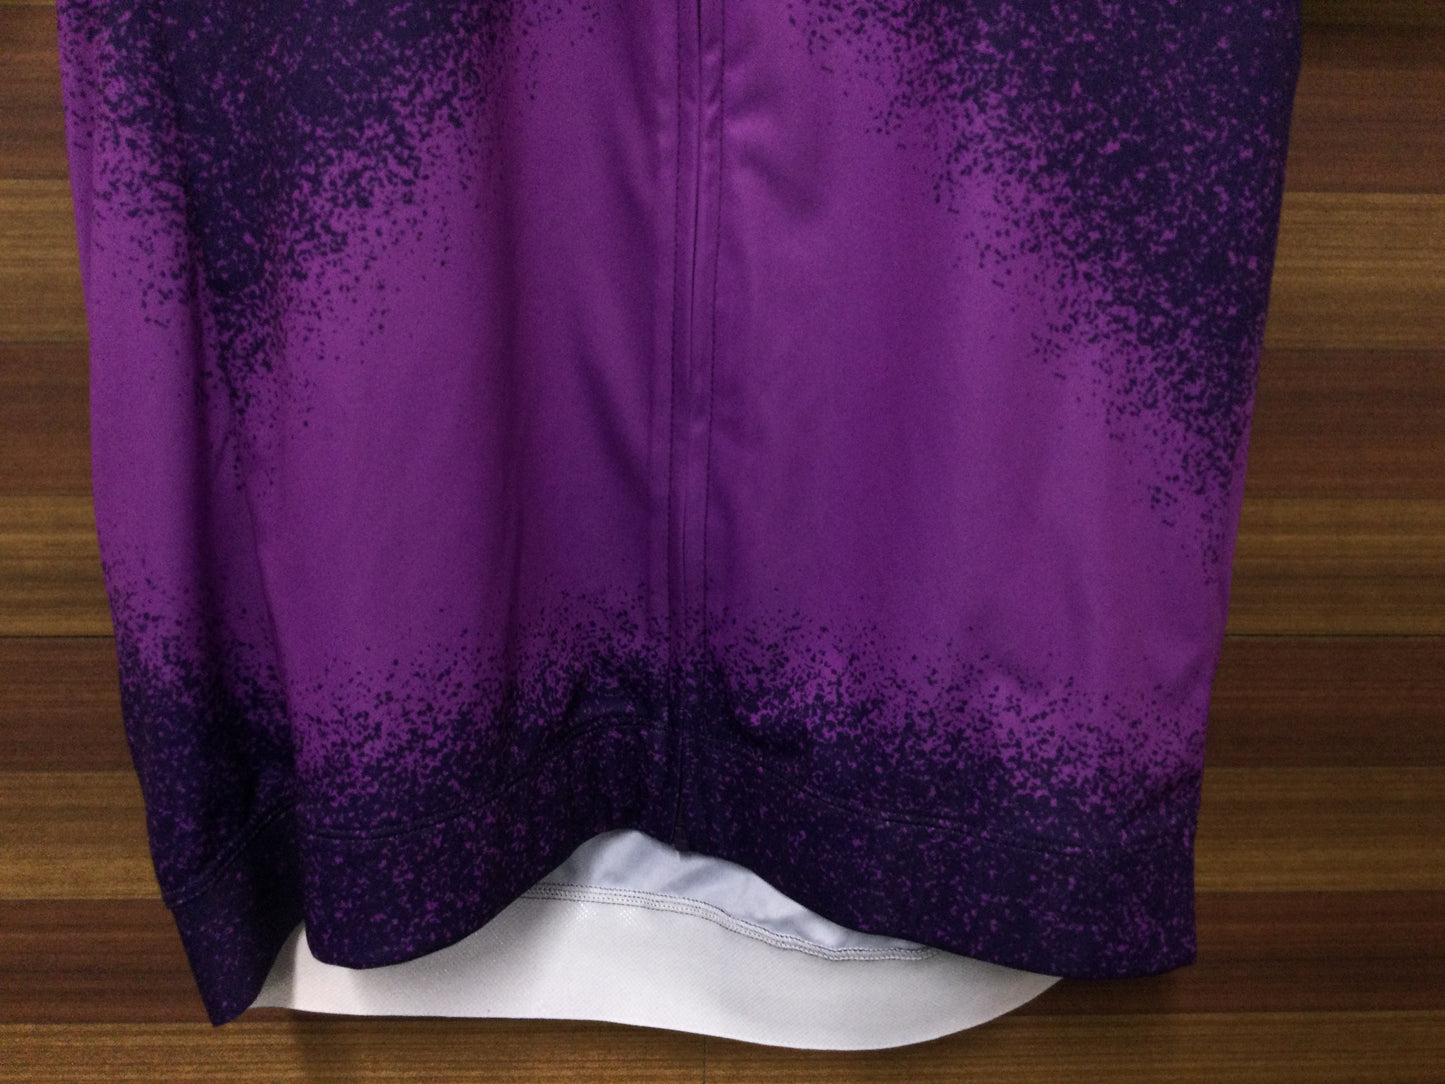 GU510 ラファ Rapha GRINDURO コアジャージ CORE JERSEY 半袖 紫 L